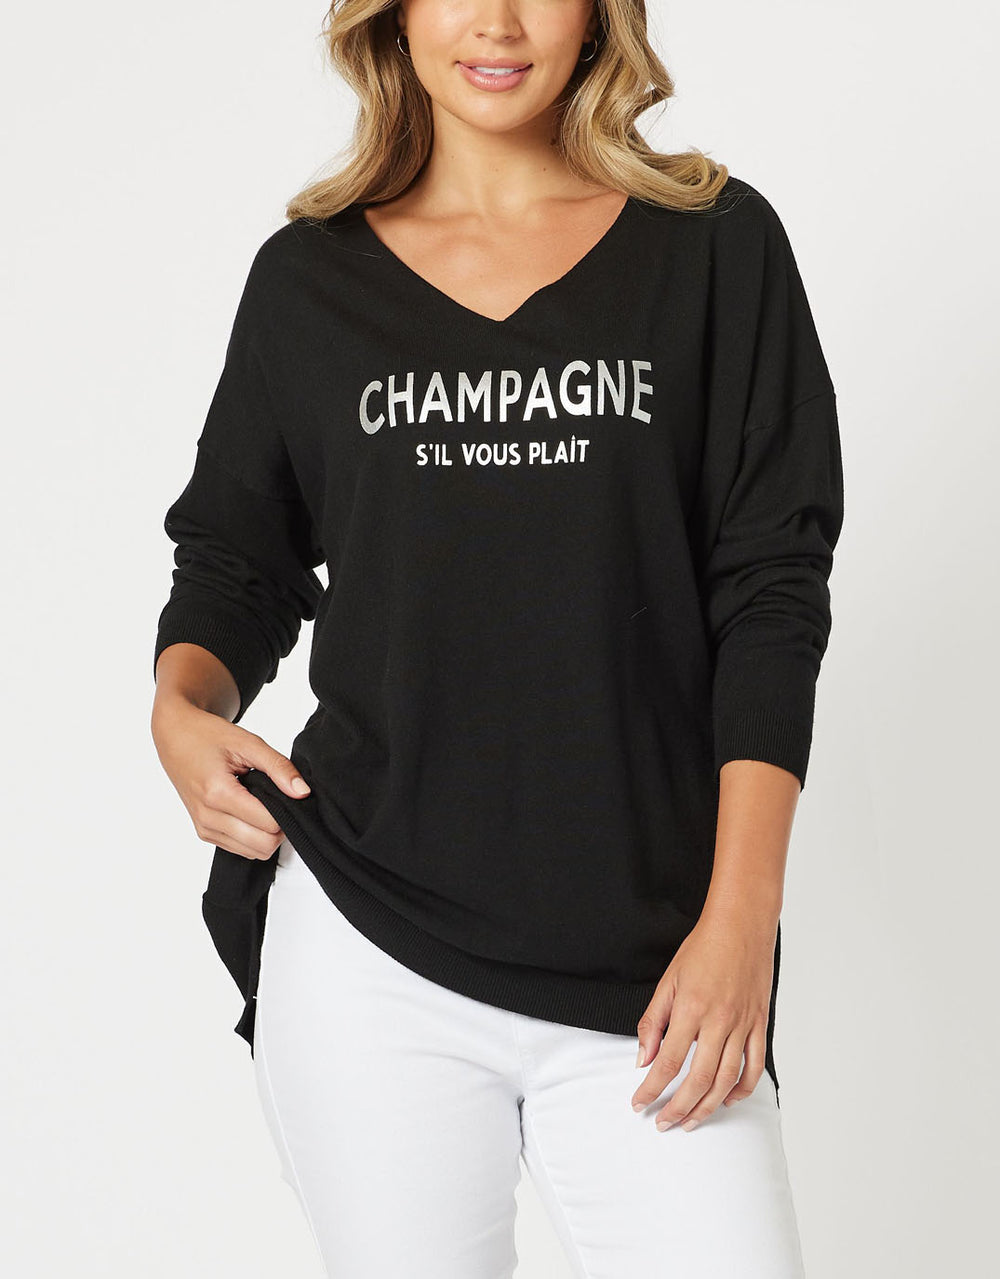 threadz-champagne-knit-black-womens-clothing